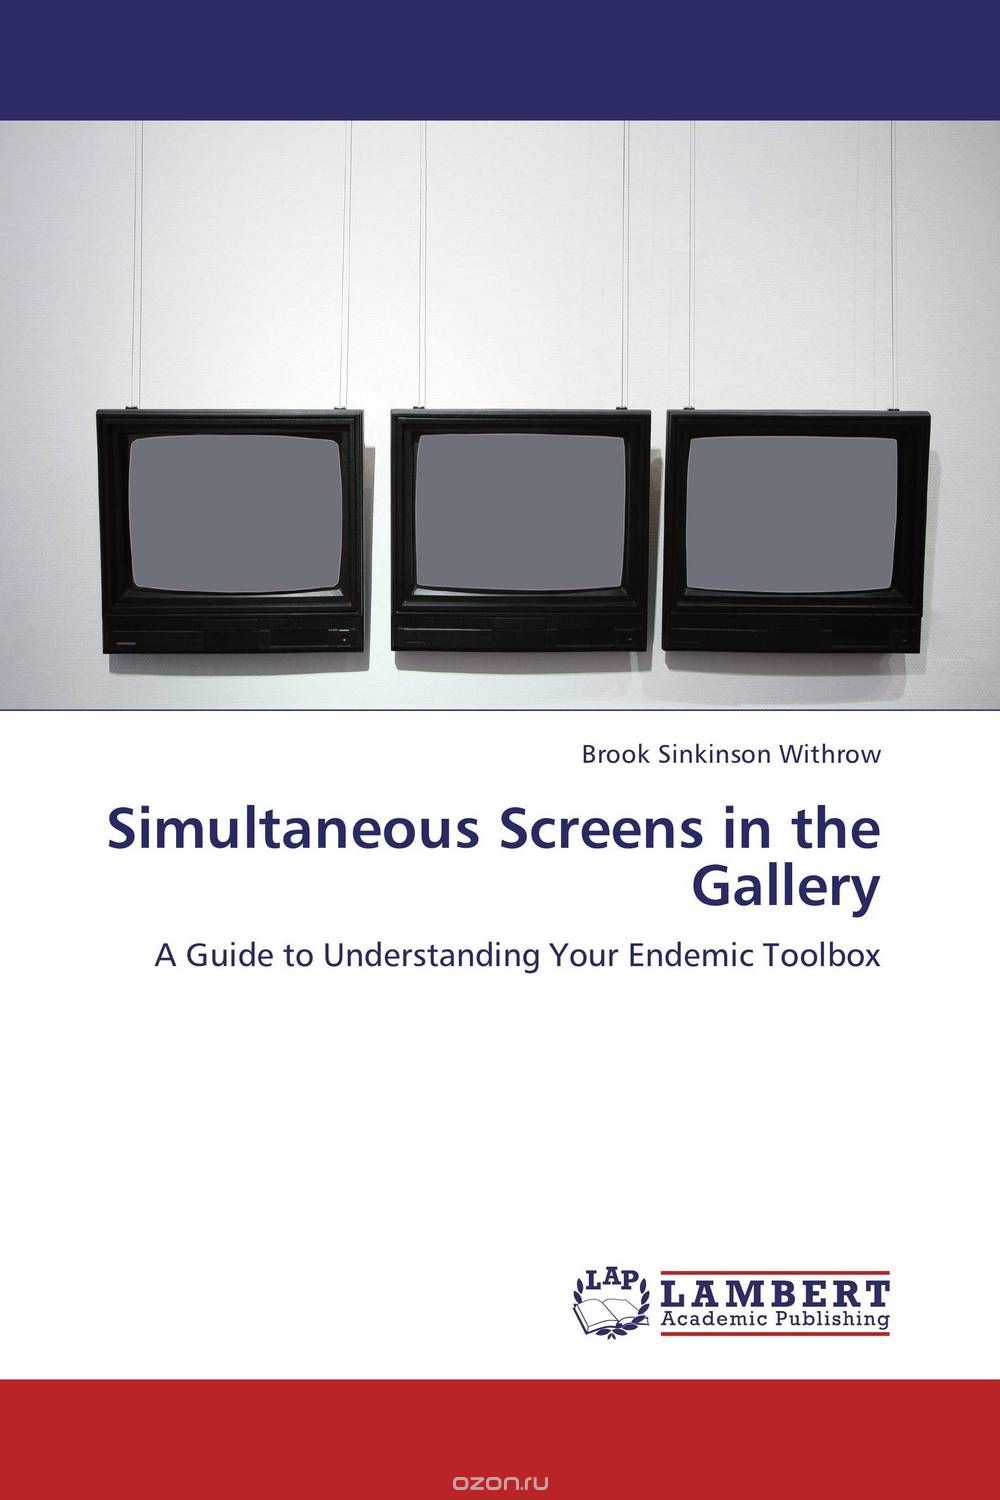 Скачать книгу "Simultaneous Screens in the Gallery"